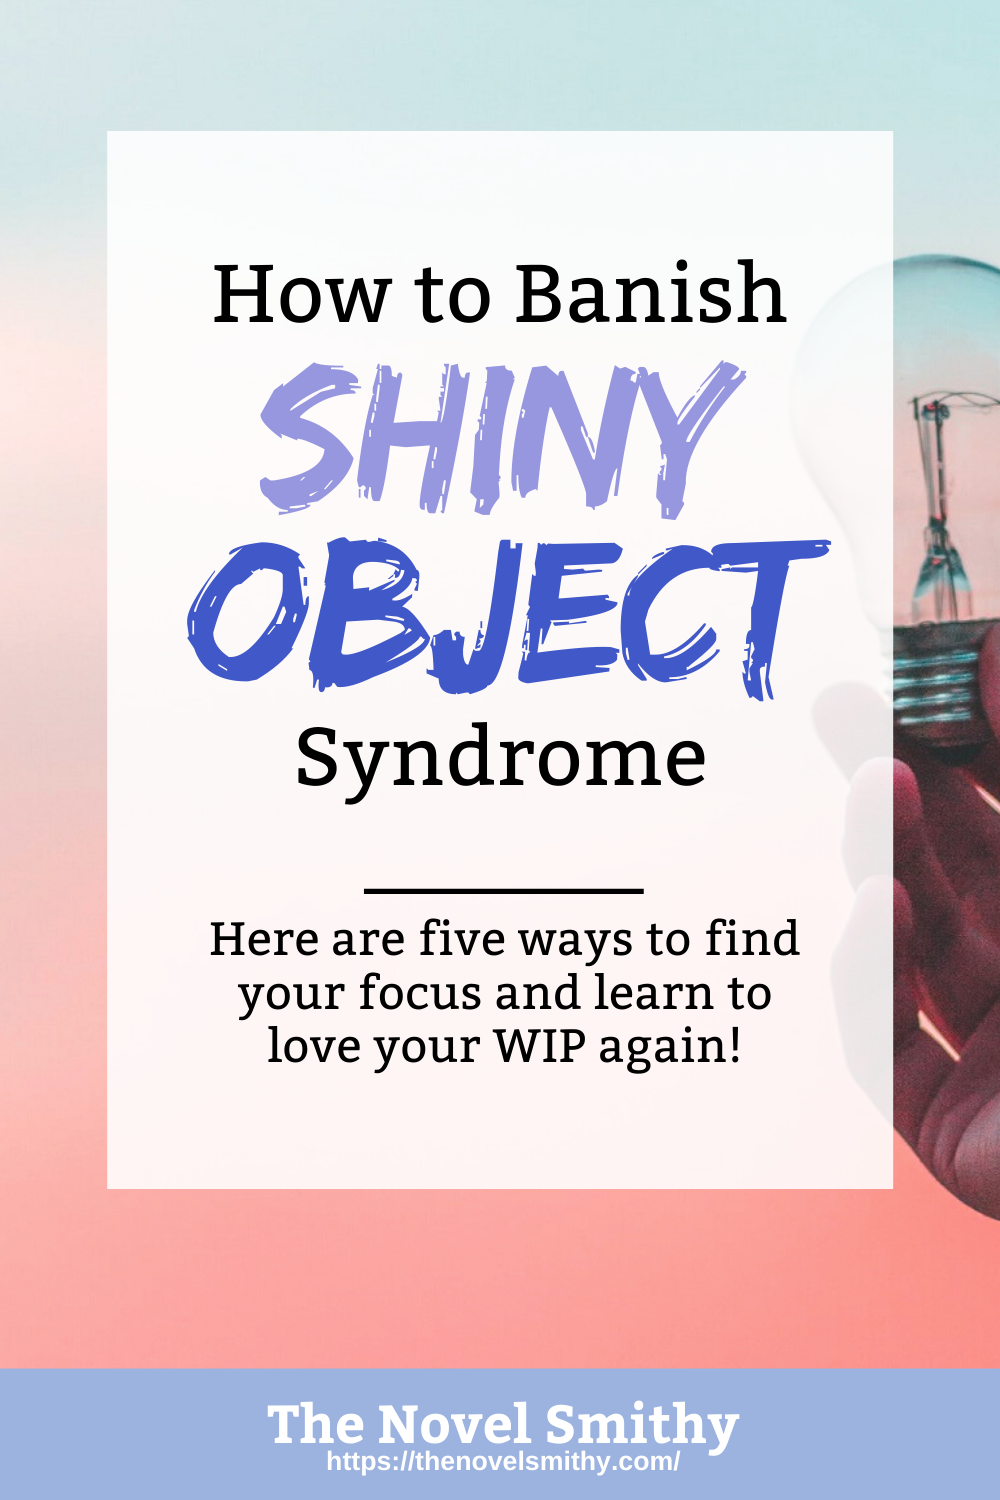 How to Banish Shiny Object Syndrome